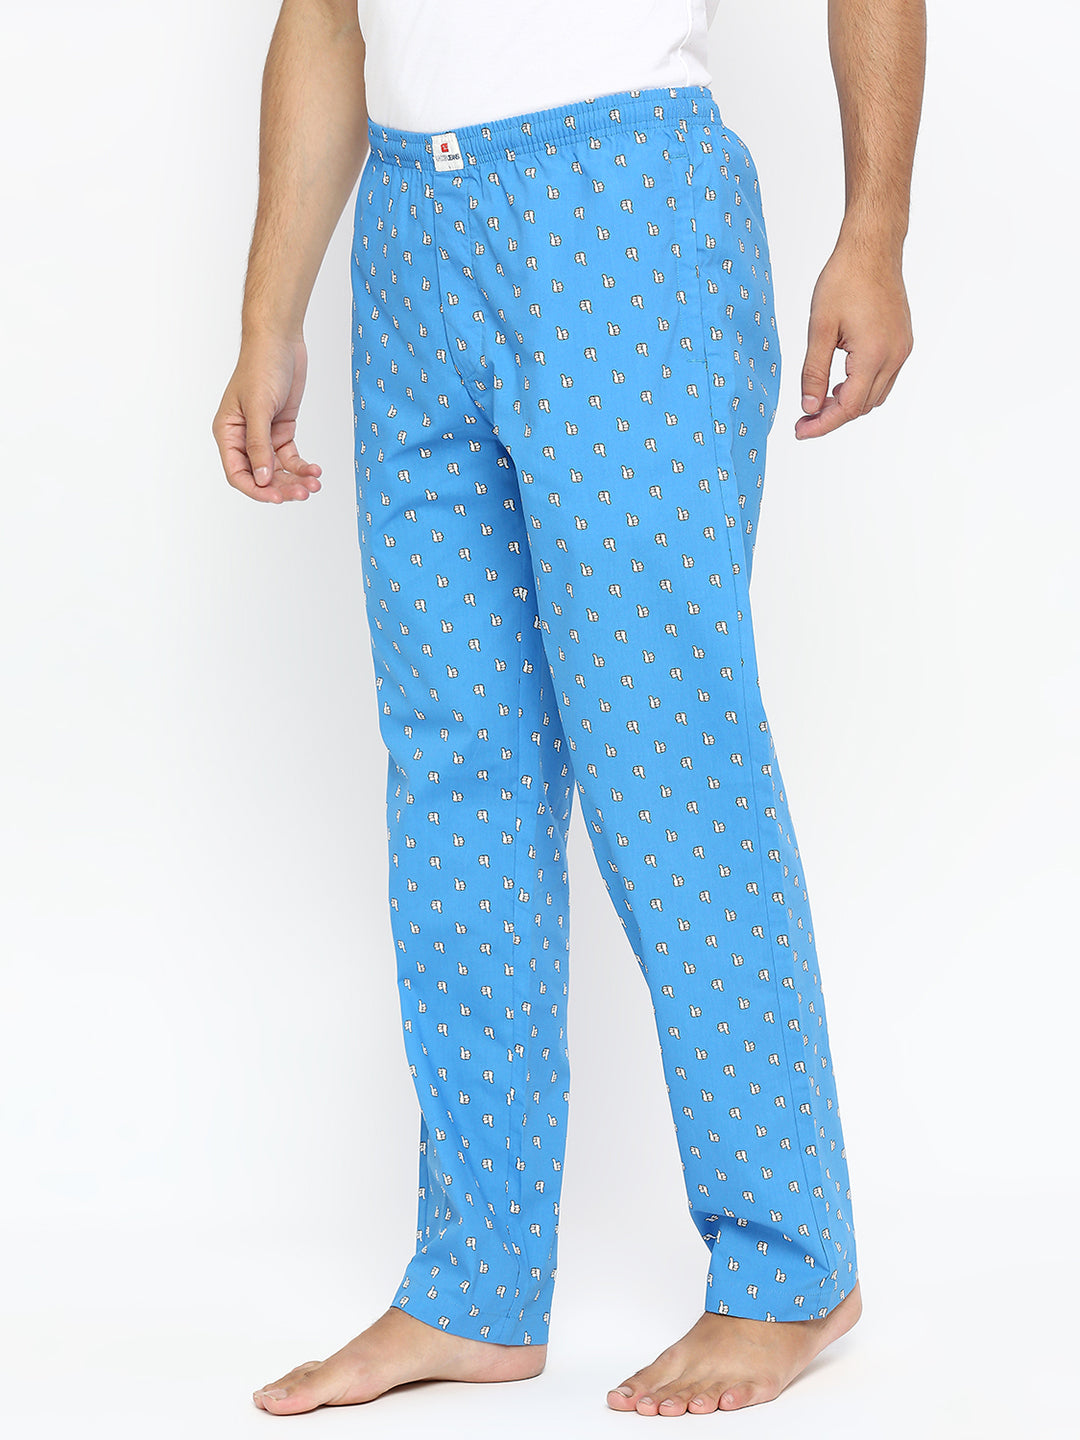 Men Premium Royalblue Cotton Woven Pyjama - UnderJeans by Spykar